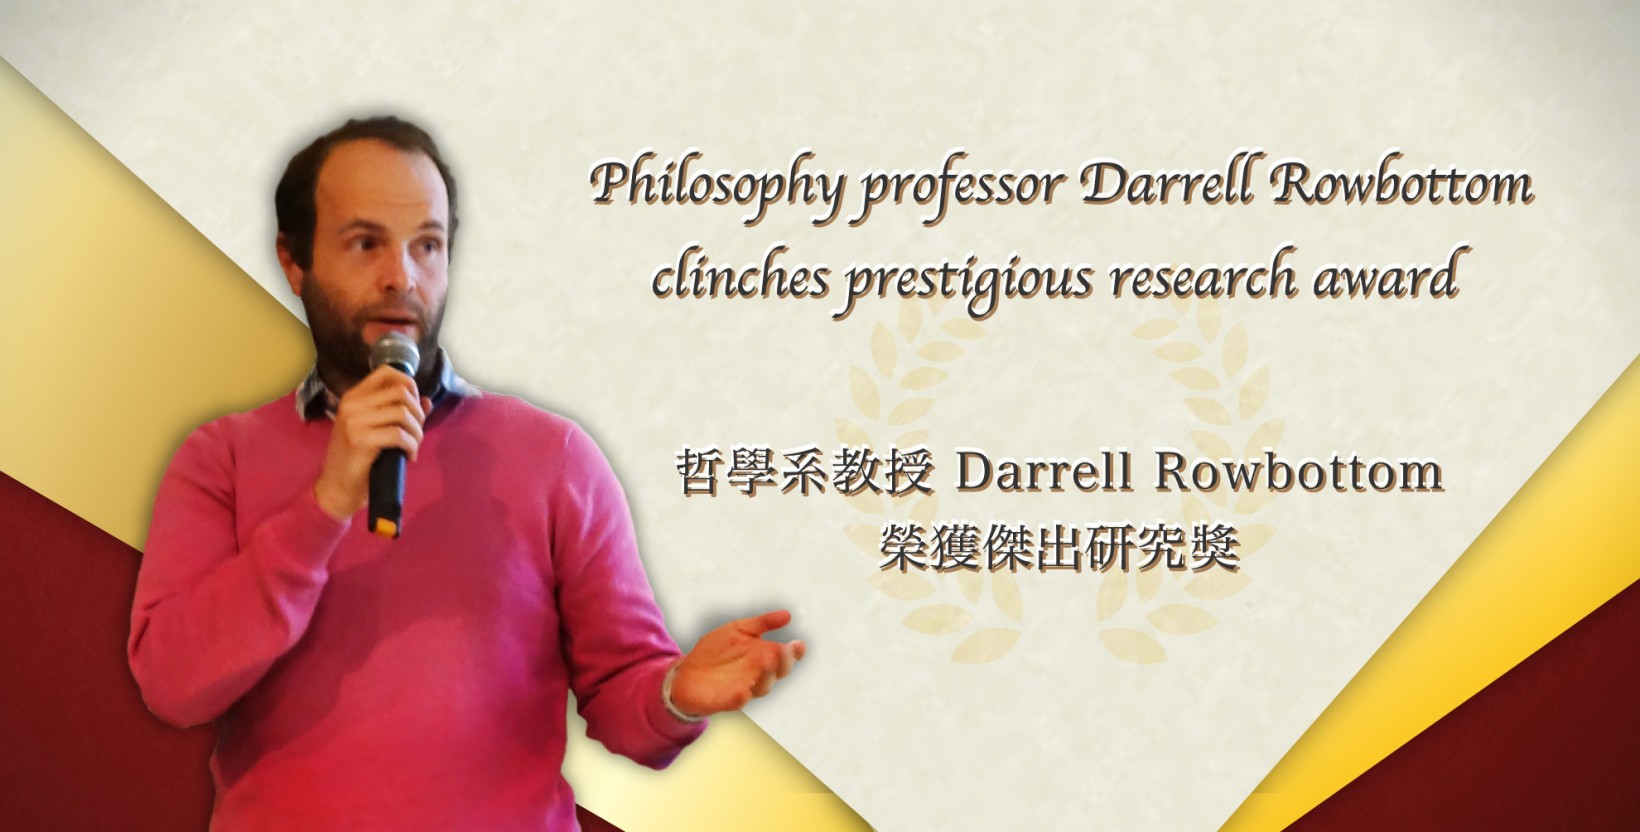 Philosophy professor Darrell Rowbottom clinches prestigious research award